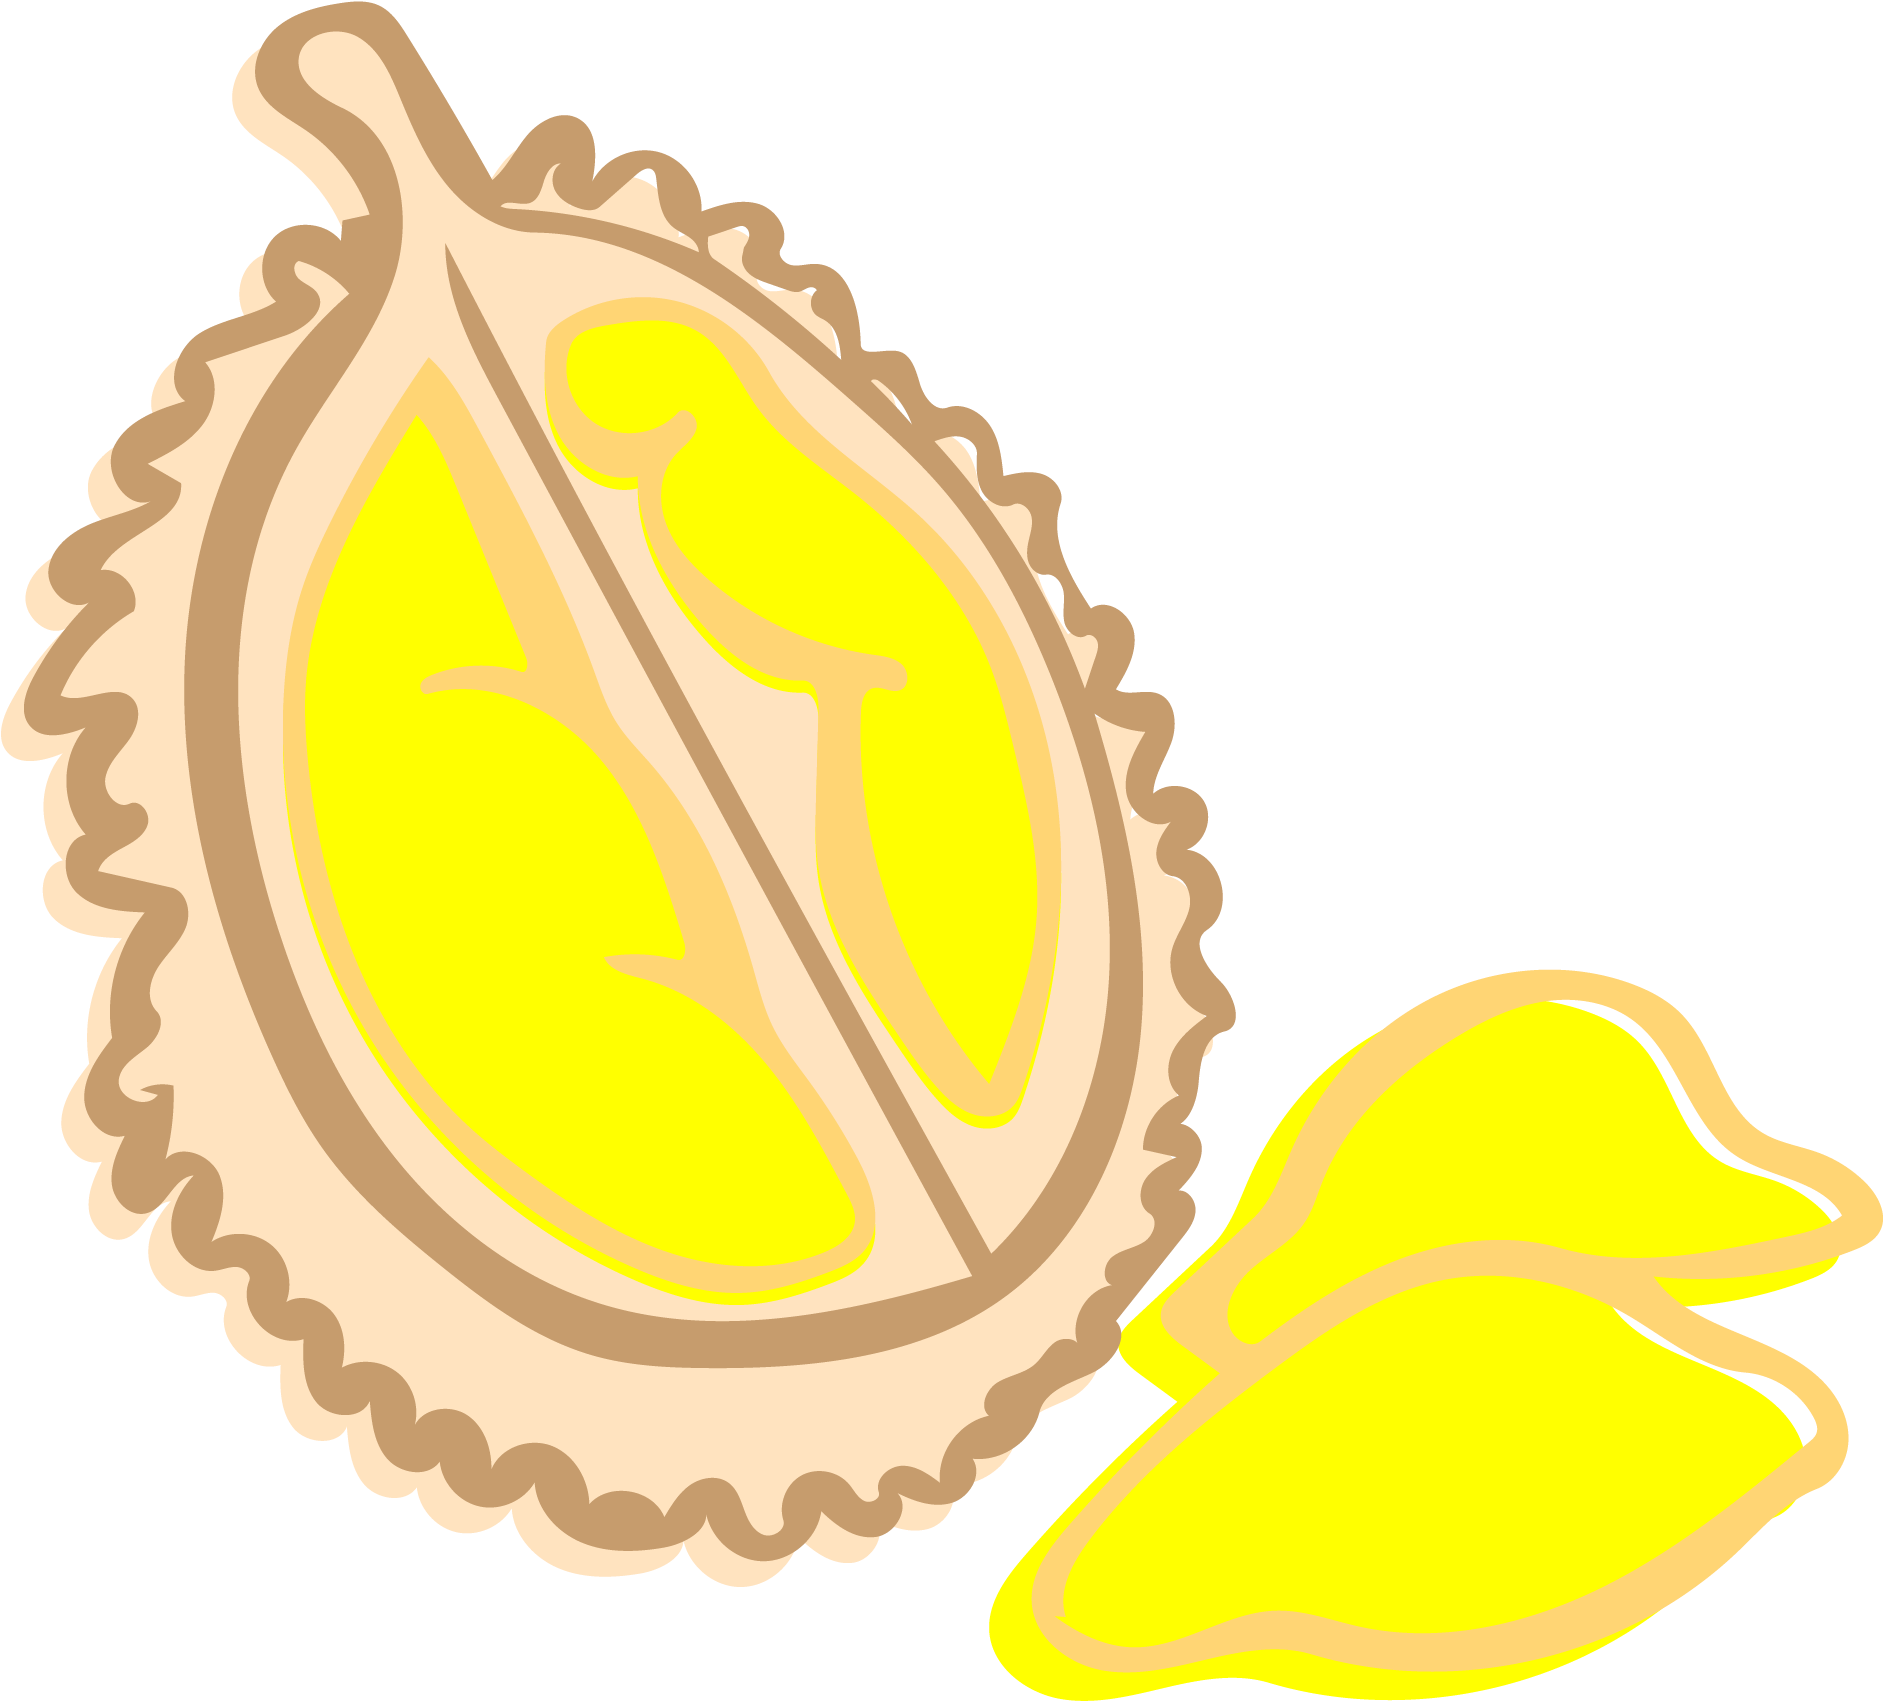 Stylized Durian Fruit Illustration PNG